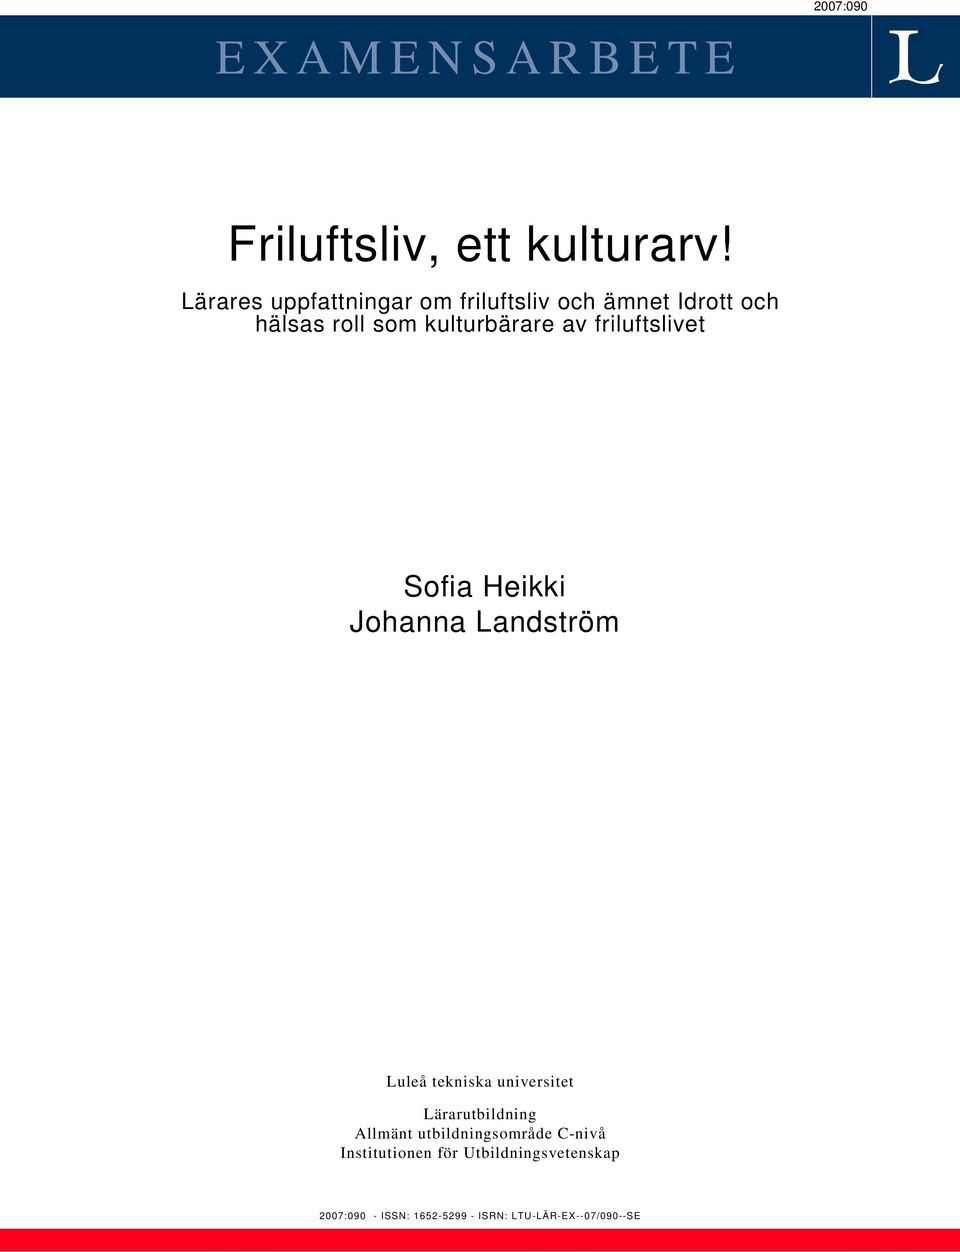 friluftslivet Sofia Heikki Johanna Landström Luleå tekniska universitet Lärarutbildning